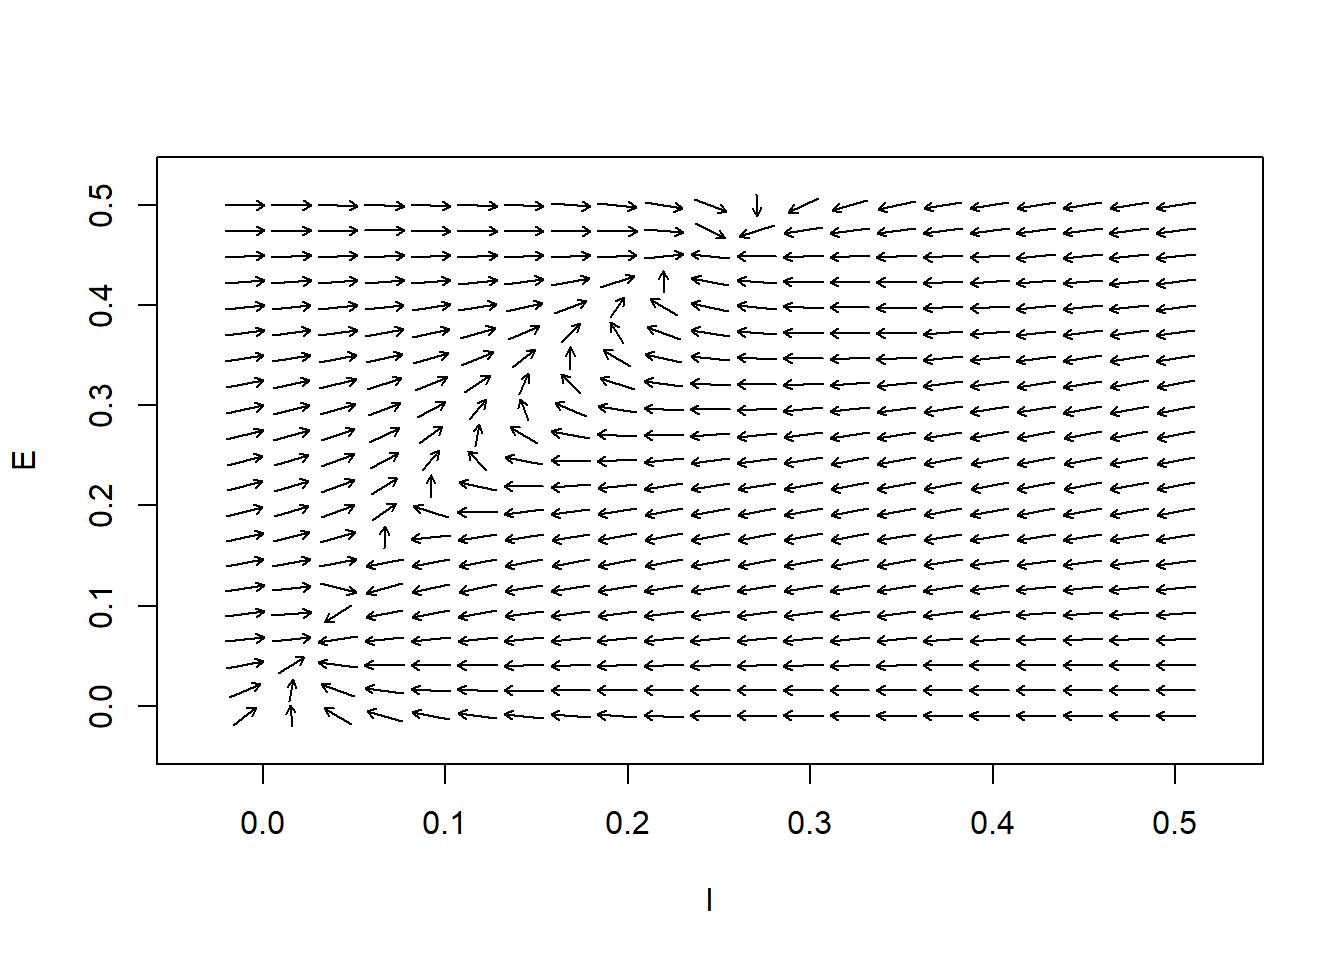 Figure  7: Flow Field and Nullclines for the Wilson-Cowan System of Equations. Parameters:$c_1=12$, $c_2 = 4$, $c_3= 13$, $c_4=11$, $a_e=1.2$, $\theta_e=2.8$, $a_i= 1$, $\theta_i = 4$, $r_e =1$, $r_i=1$, $P=0$, and $Q=0$.